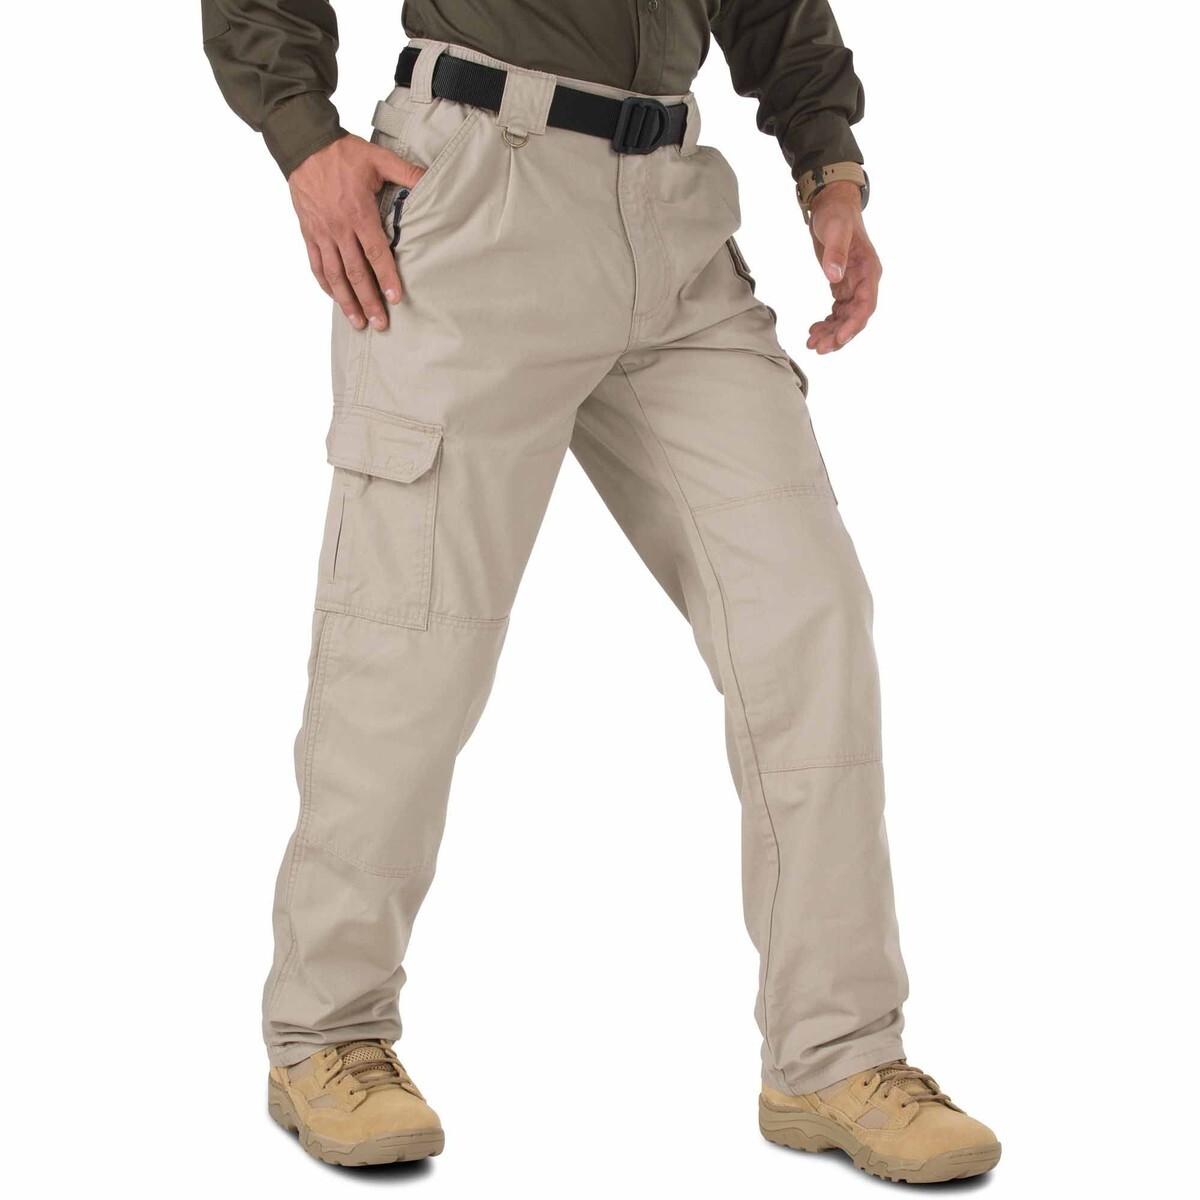 cuffed tactical pants